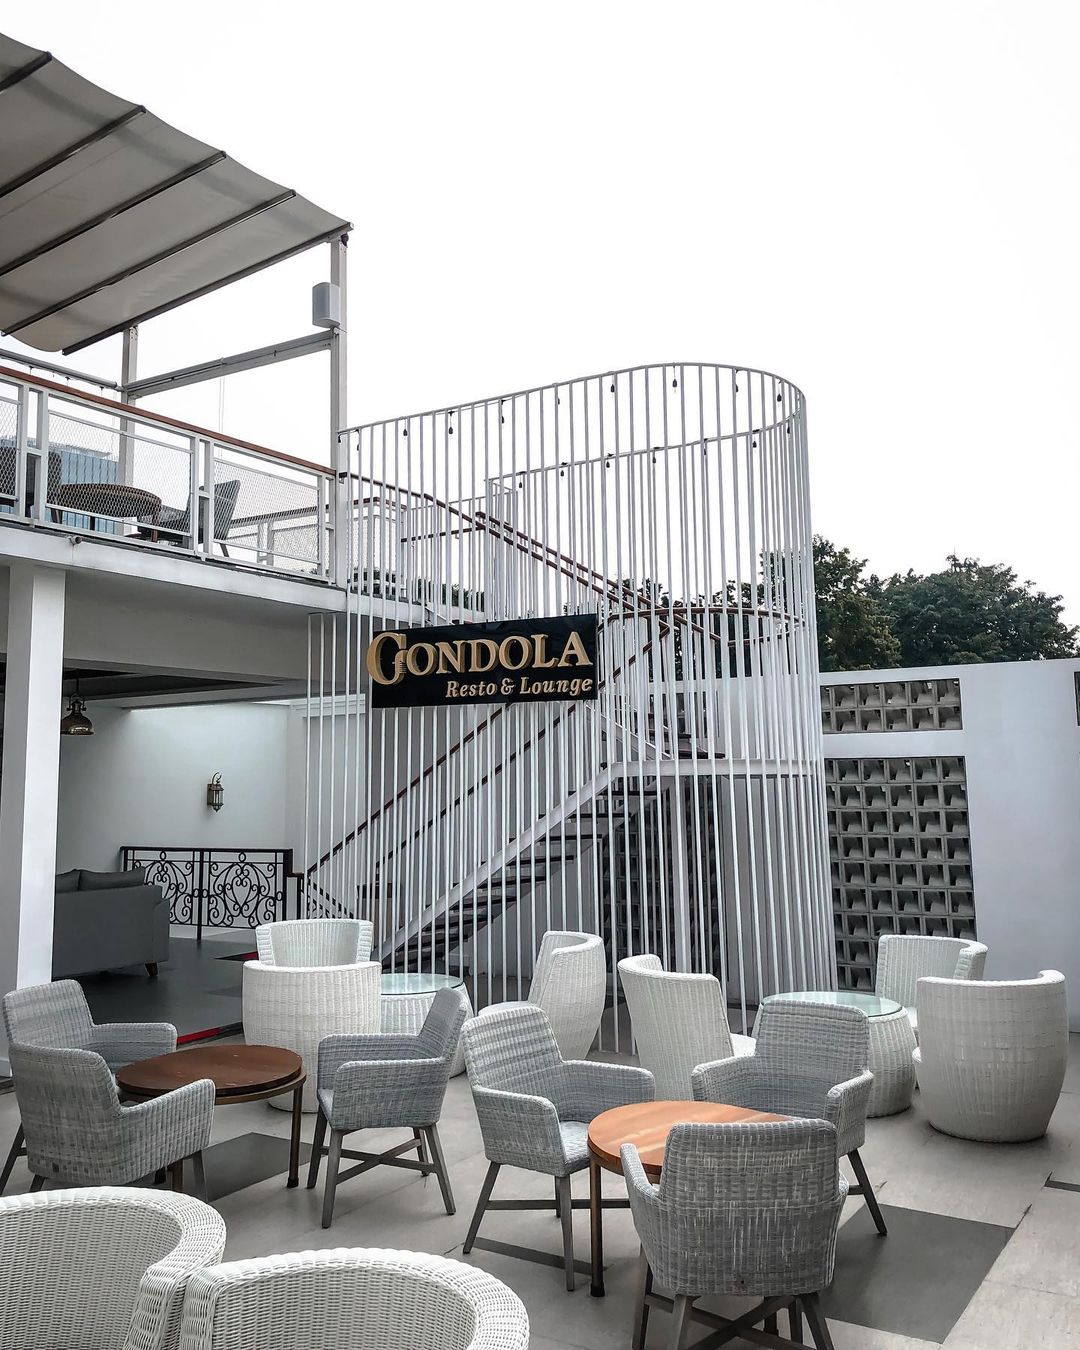 Gondola Resto & Lounge Jakarta